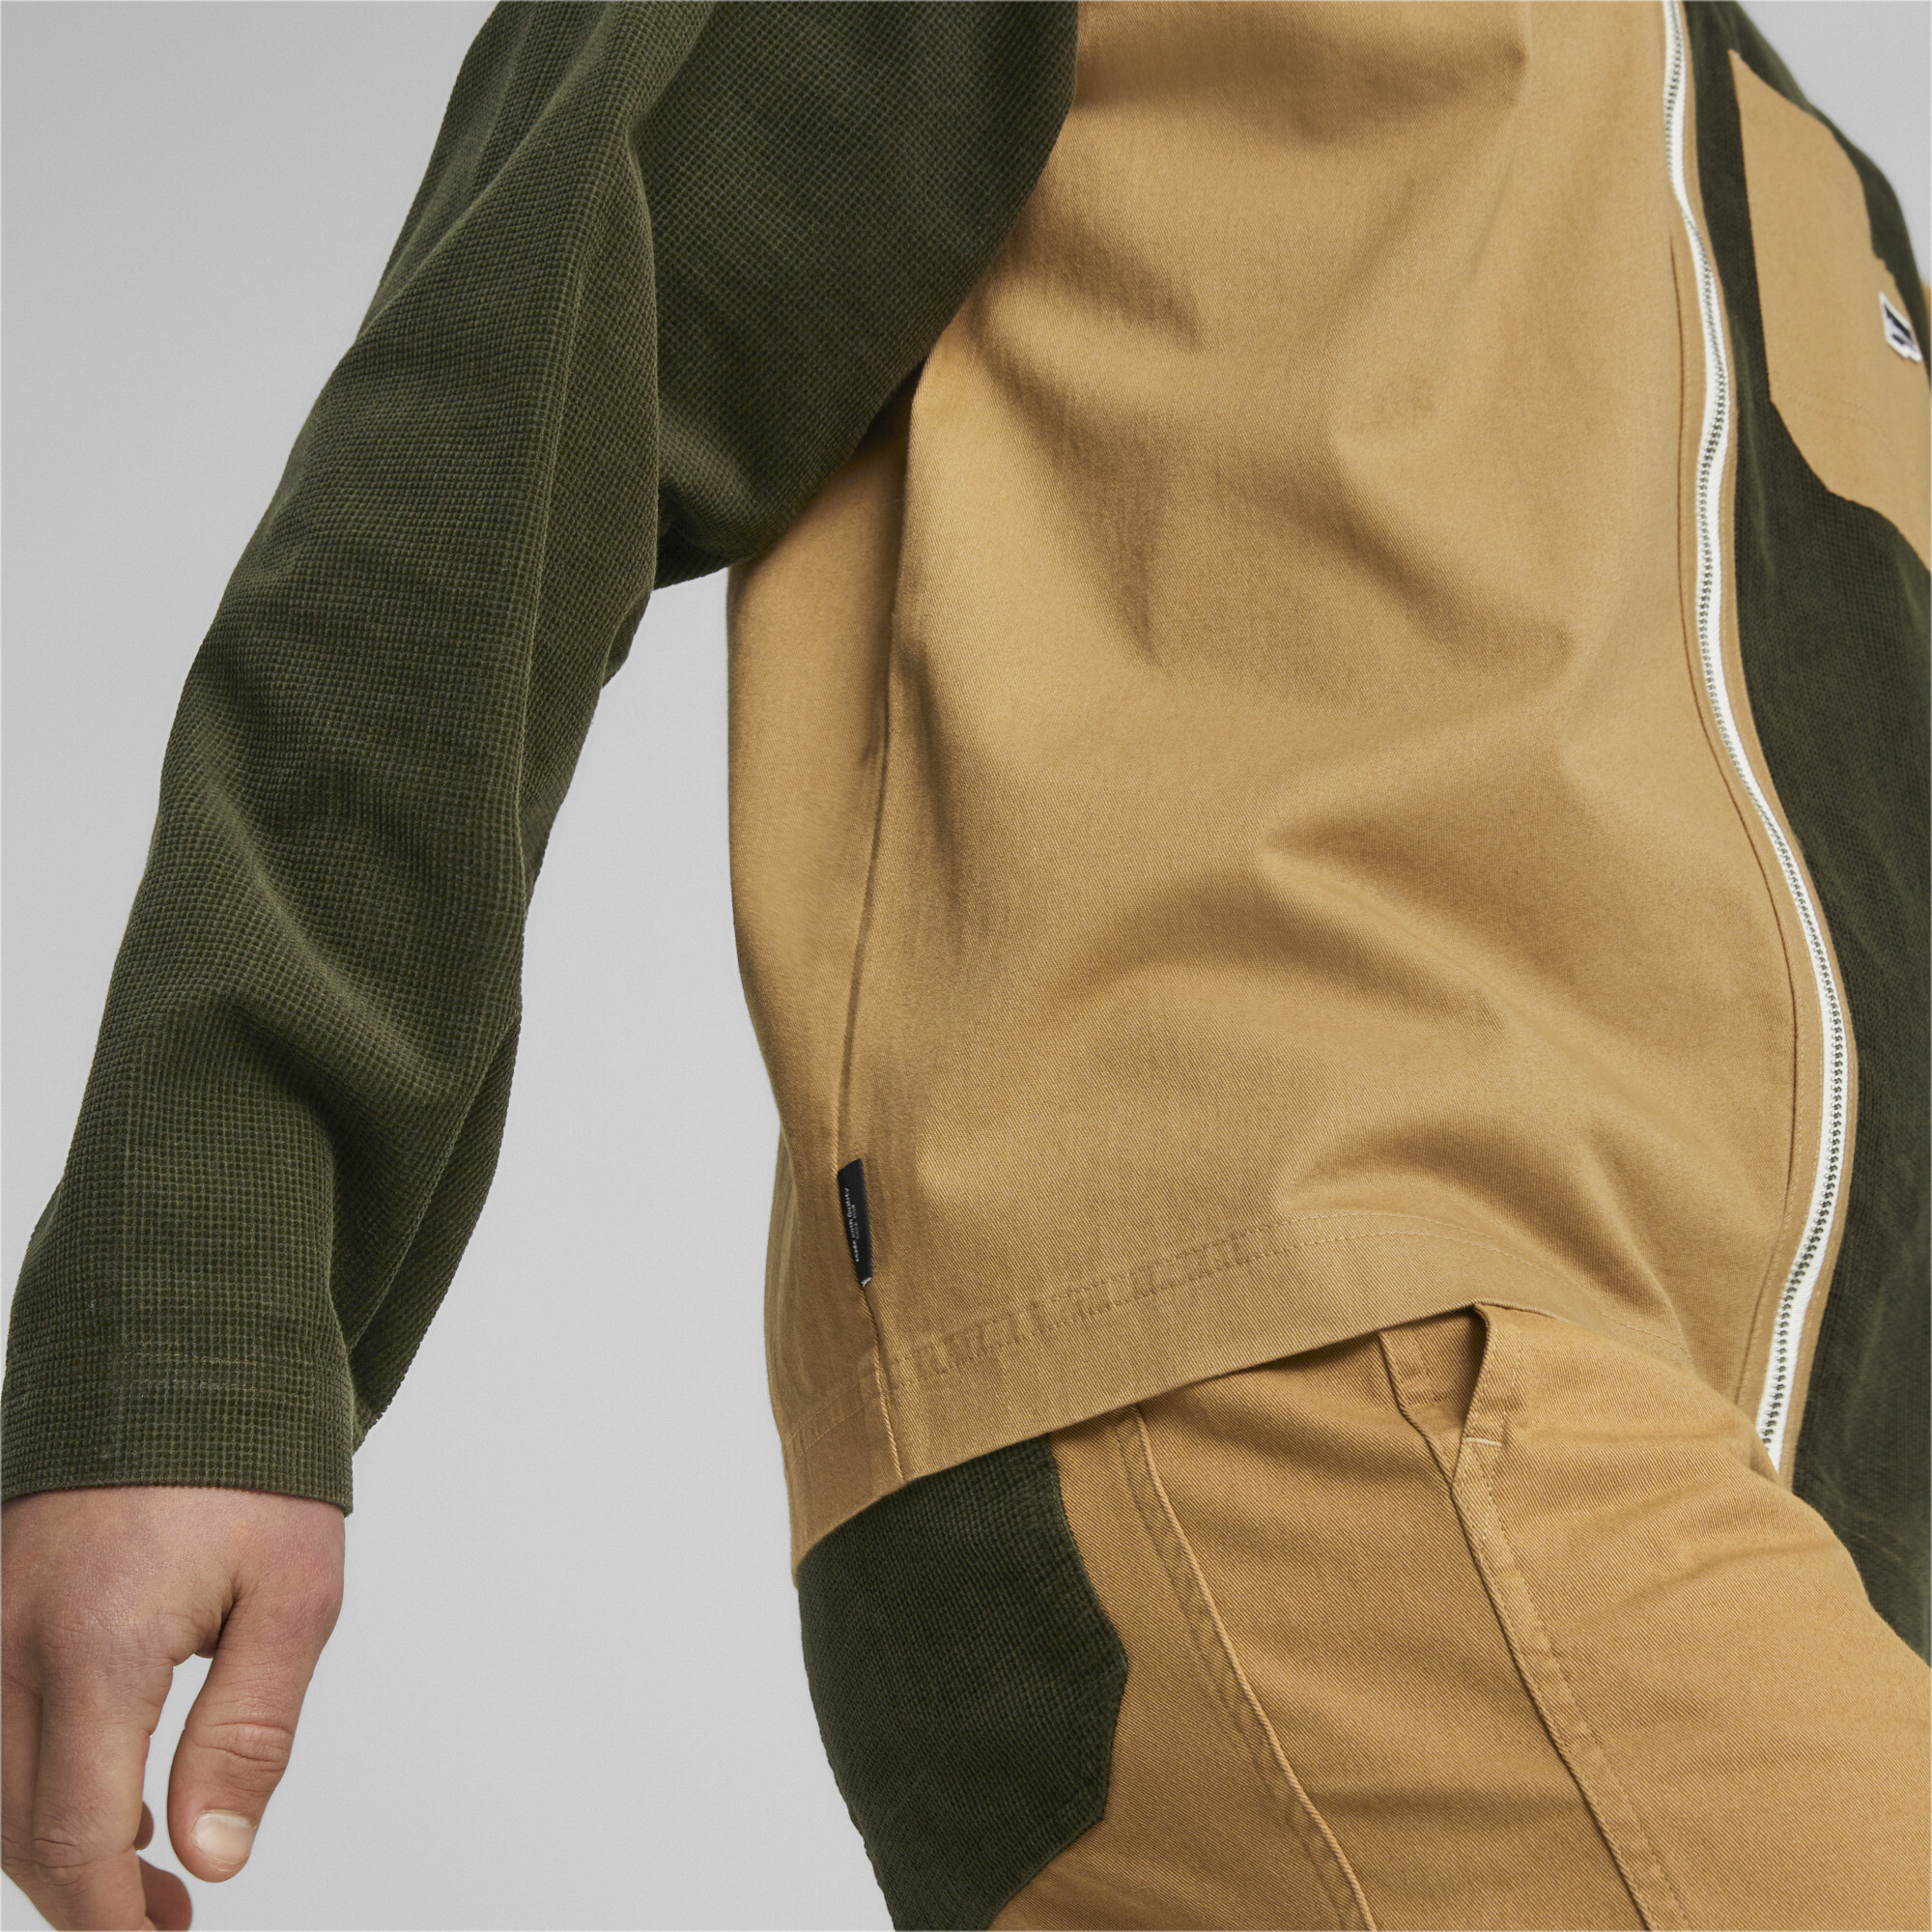 Men's Puma DOWNTOWN's Corduroy Shirt, Green, Size S, Clothing